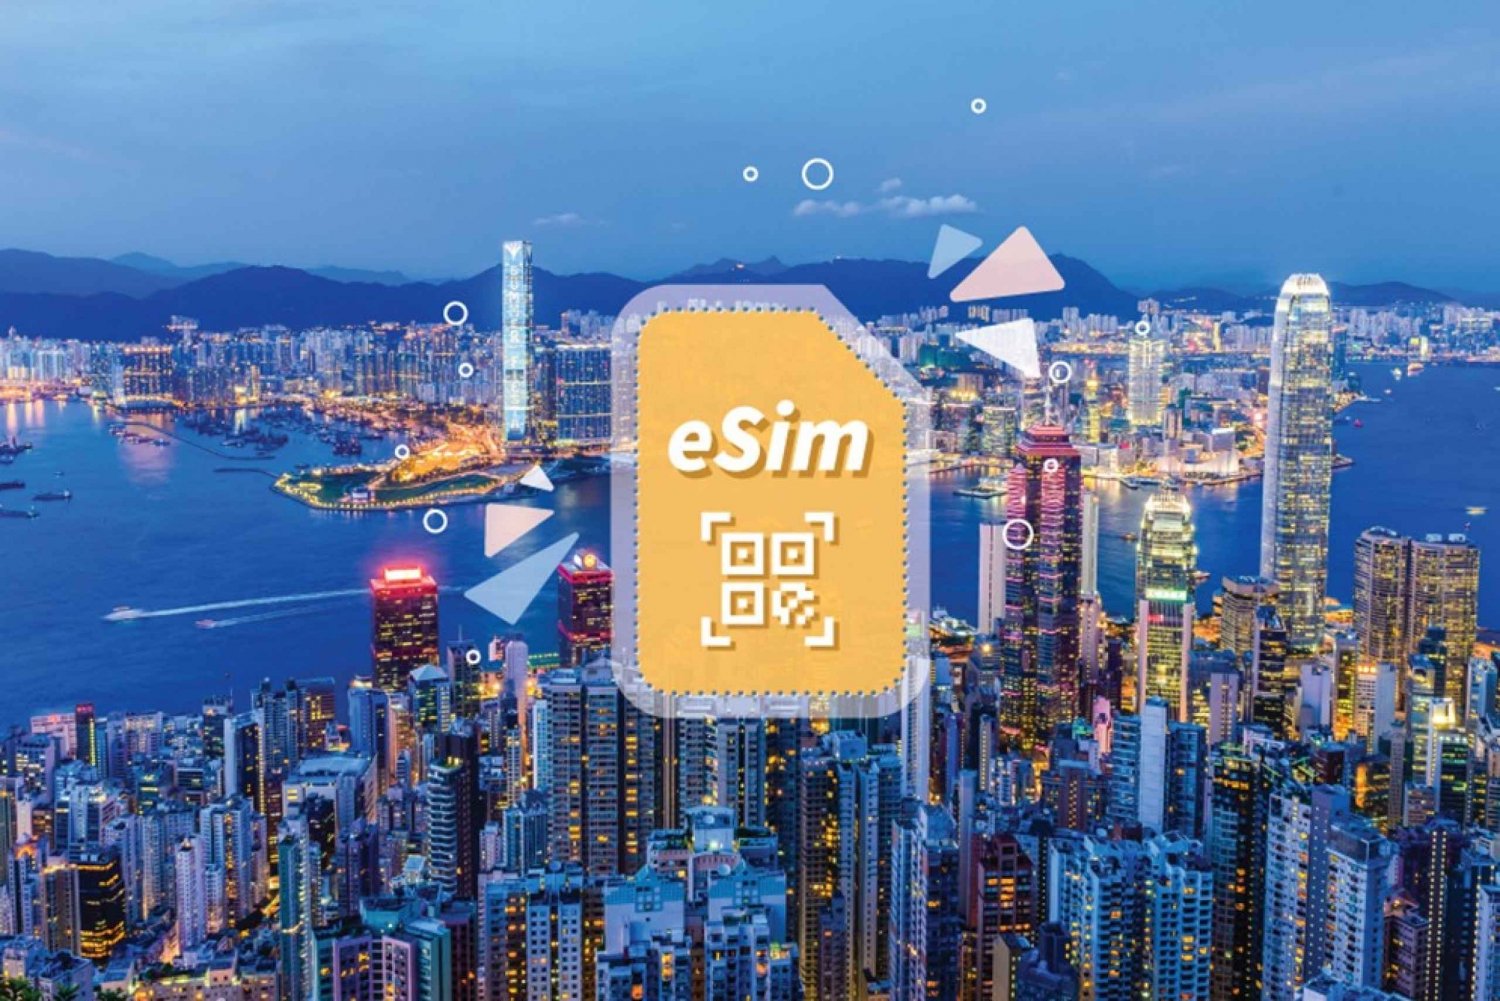 Cina: piano dati eSIM con VPN per Hong Kong, Macao e altro ancora